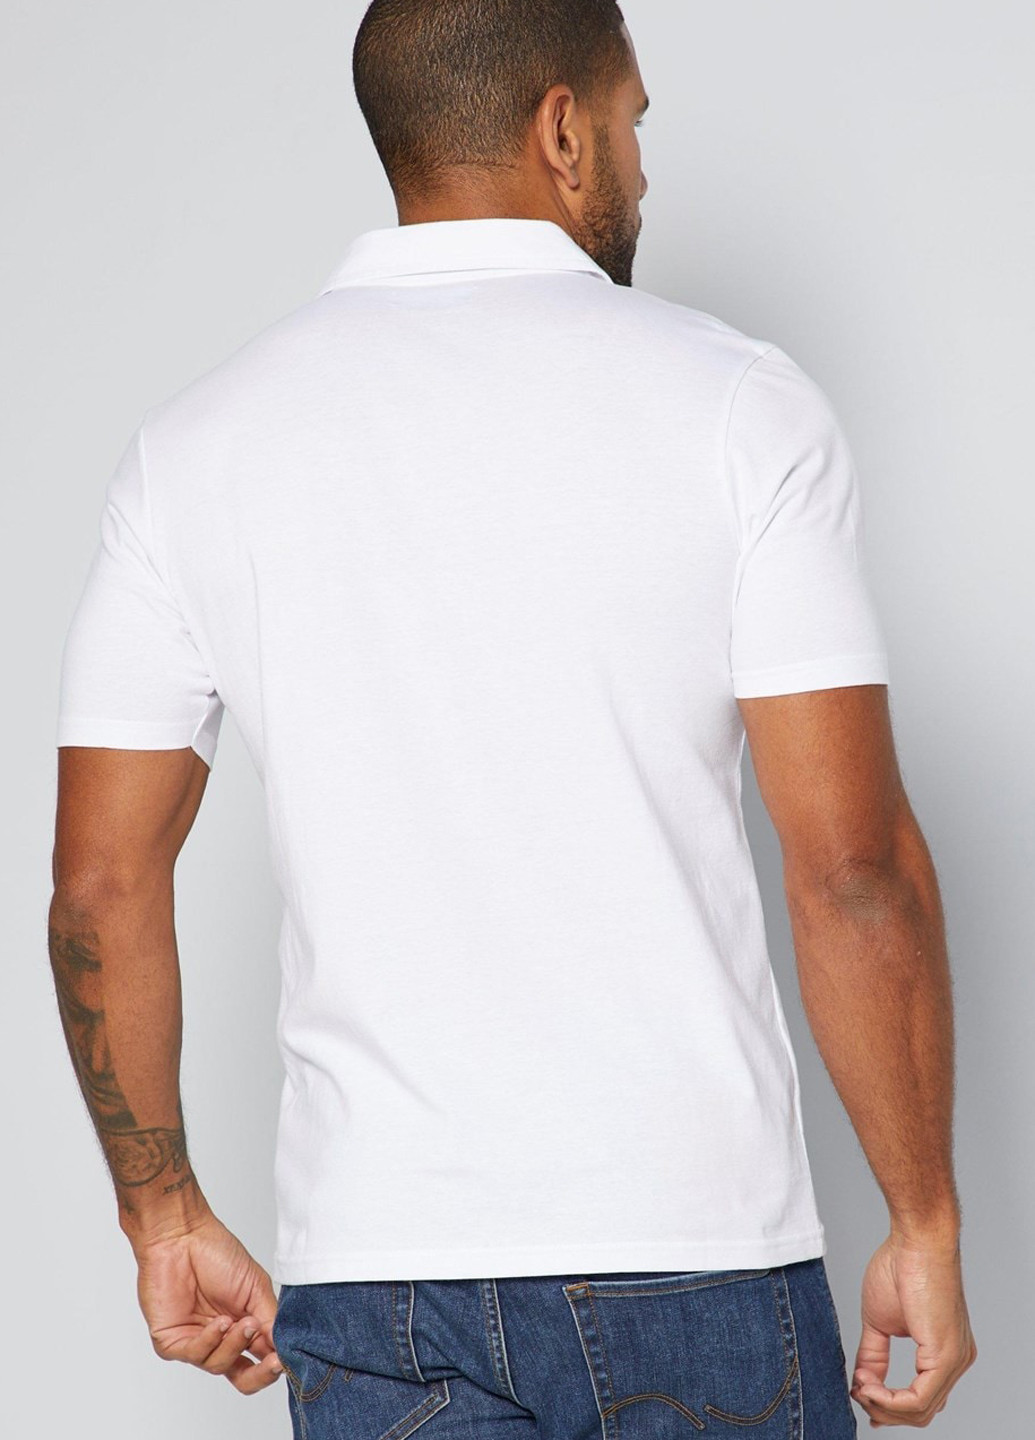 Белая футболка-поло для мужчин Studio однотонная